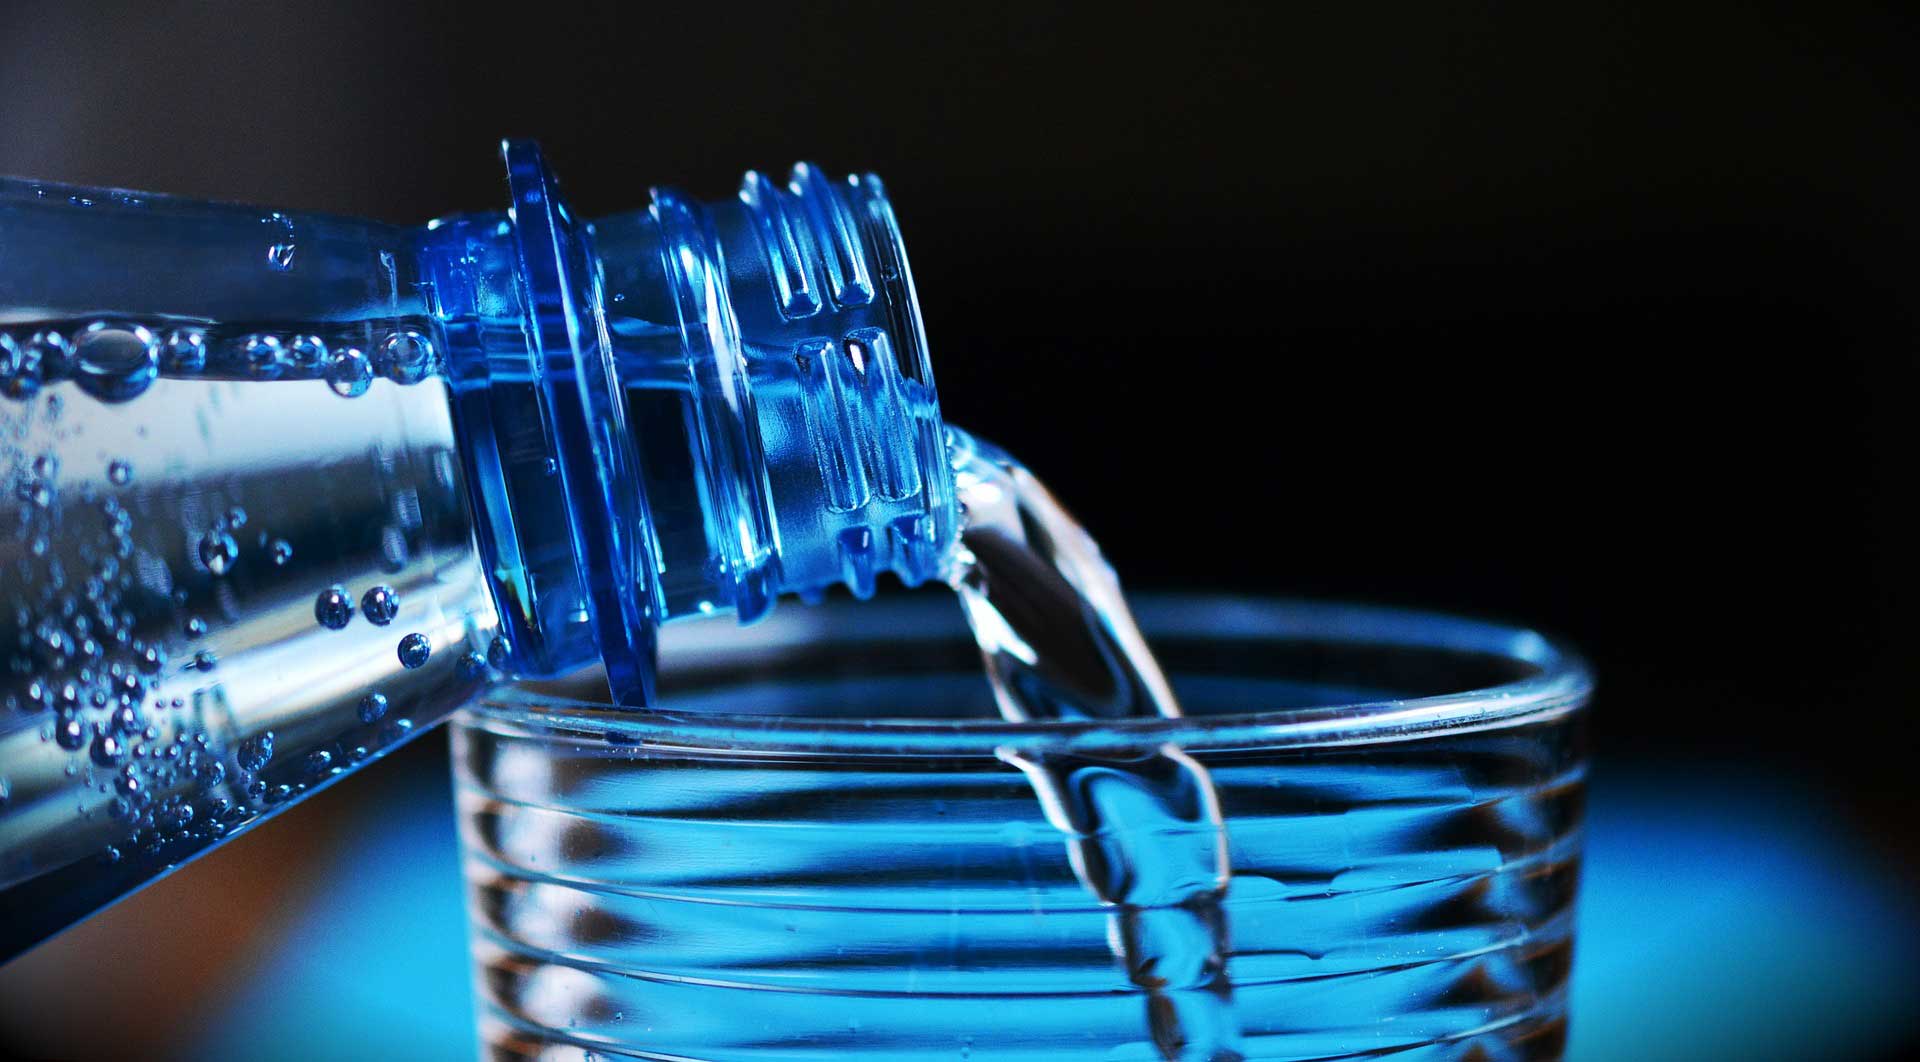 shishe plastike uji, trajtimi i ujit, Burimet e ujit